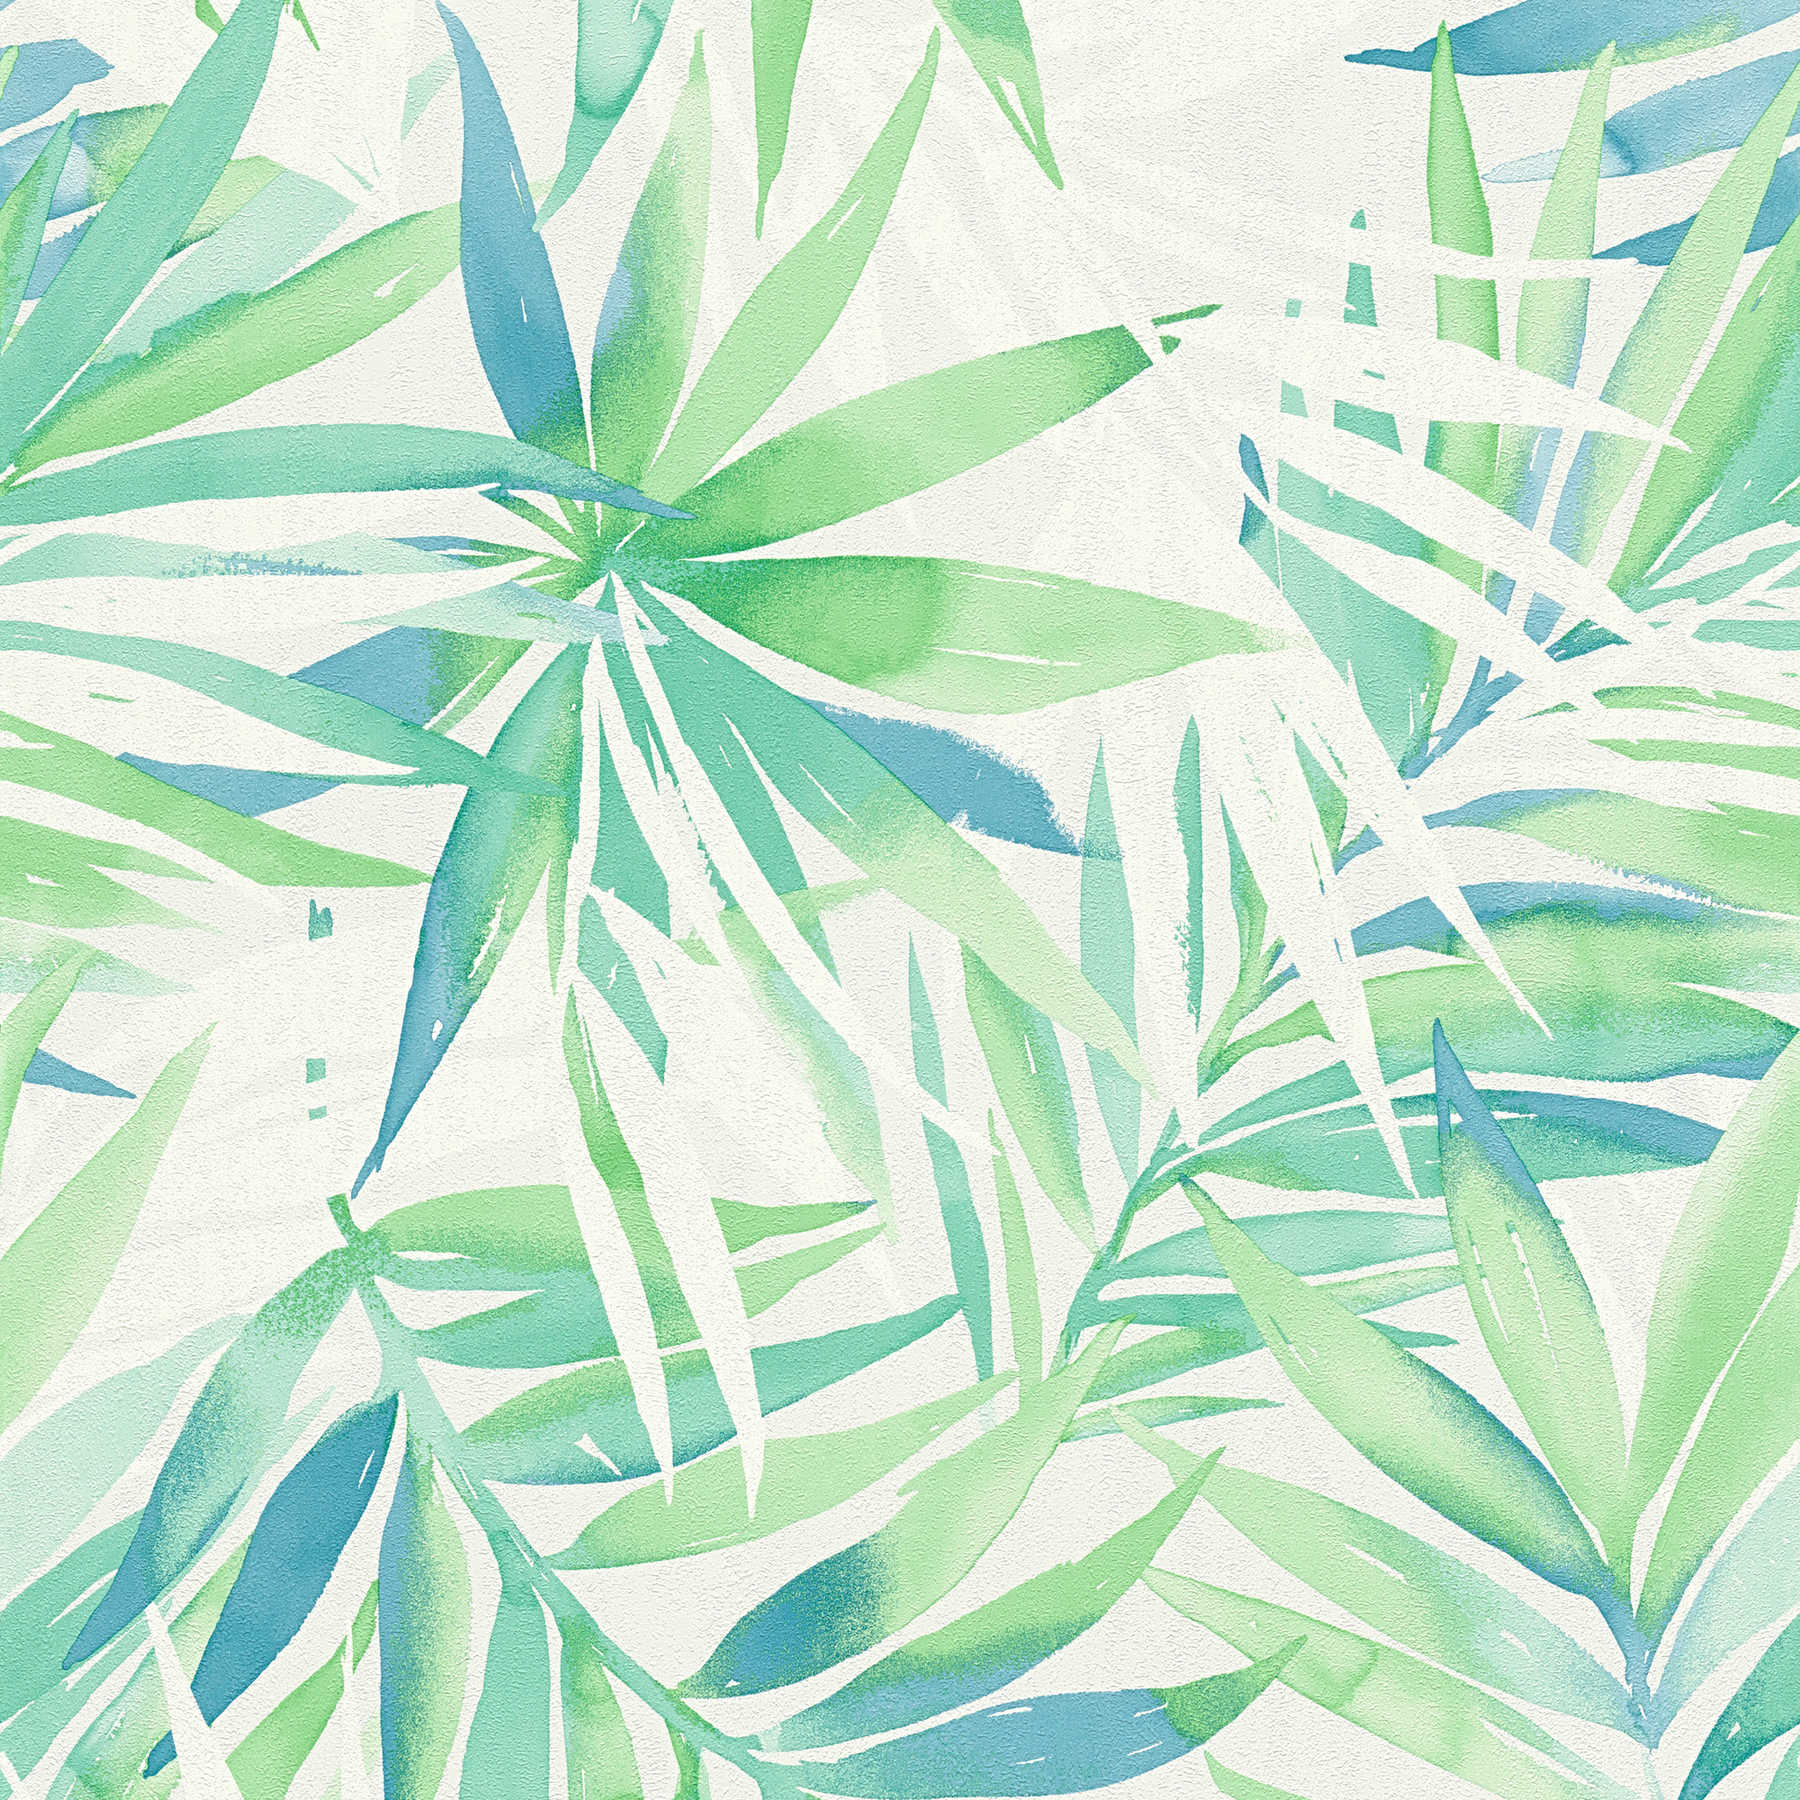 Dschungel Tapete Blättermotiv im Aquarell Stil – Grün
